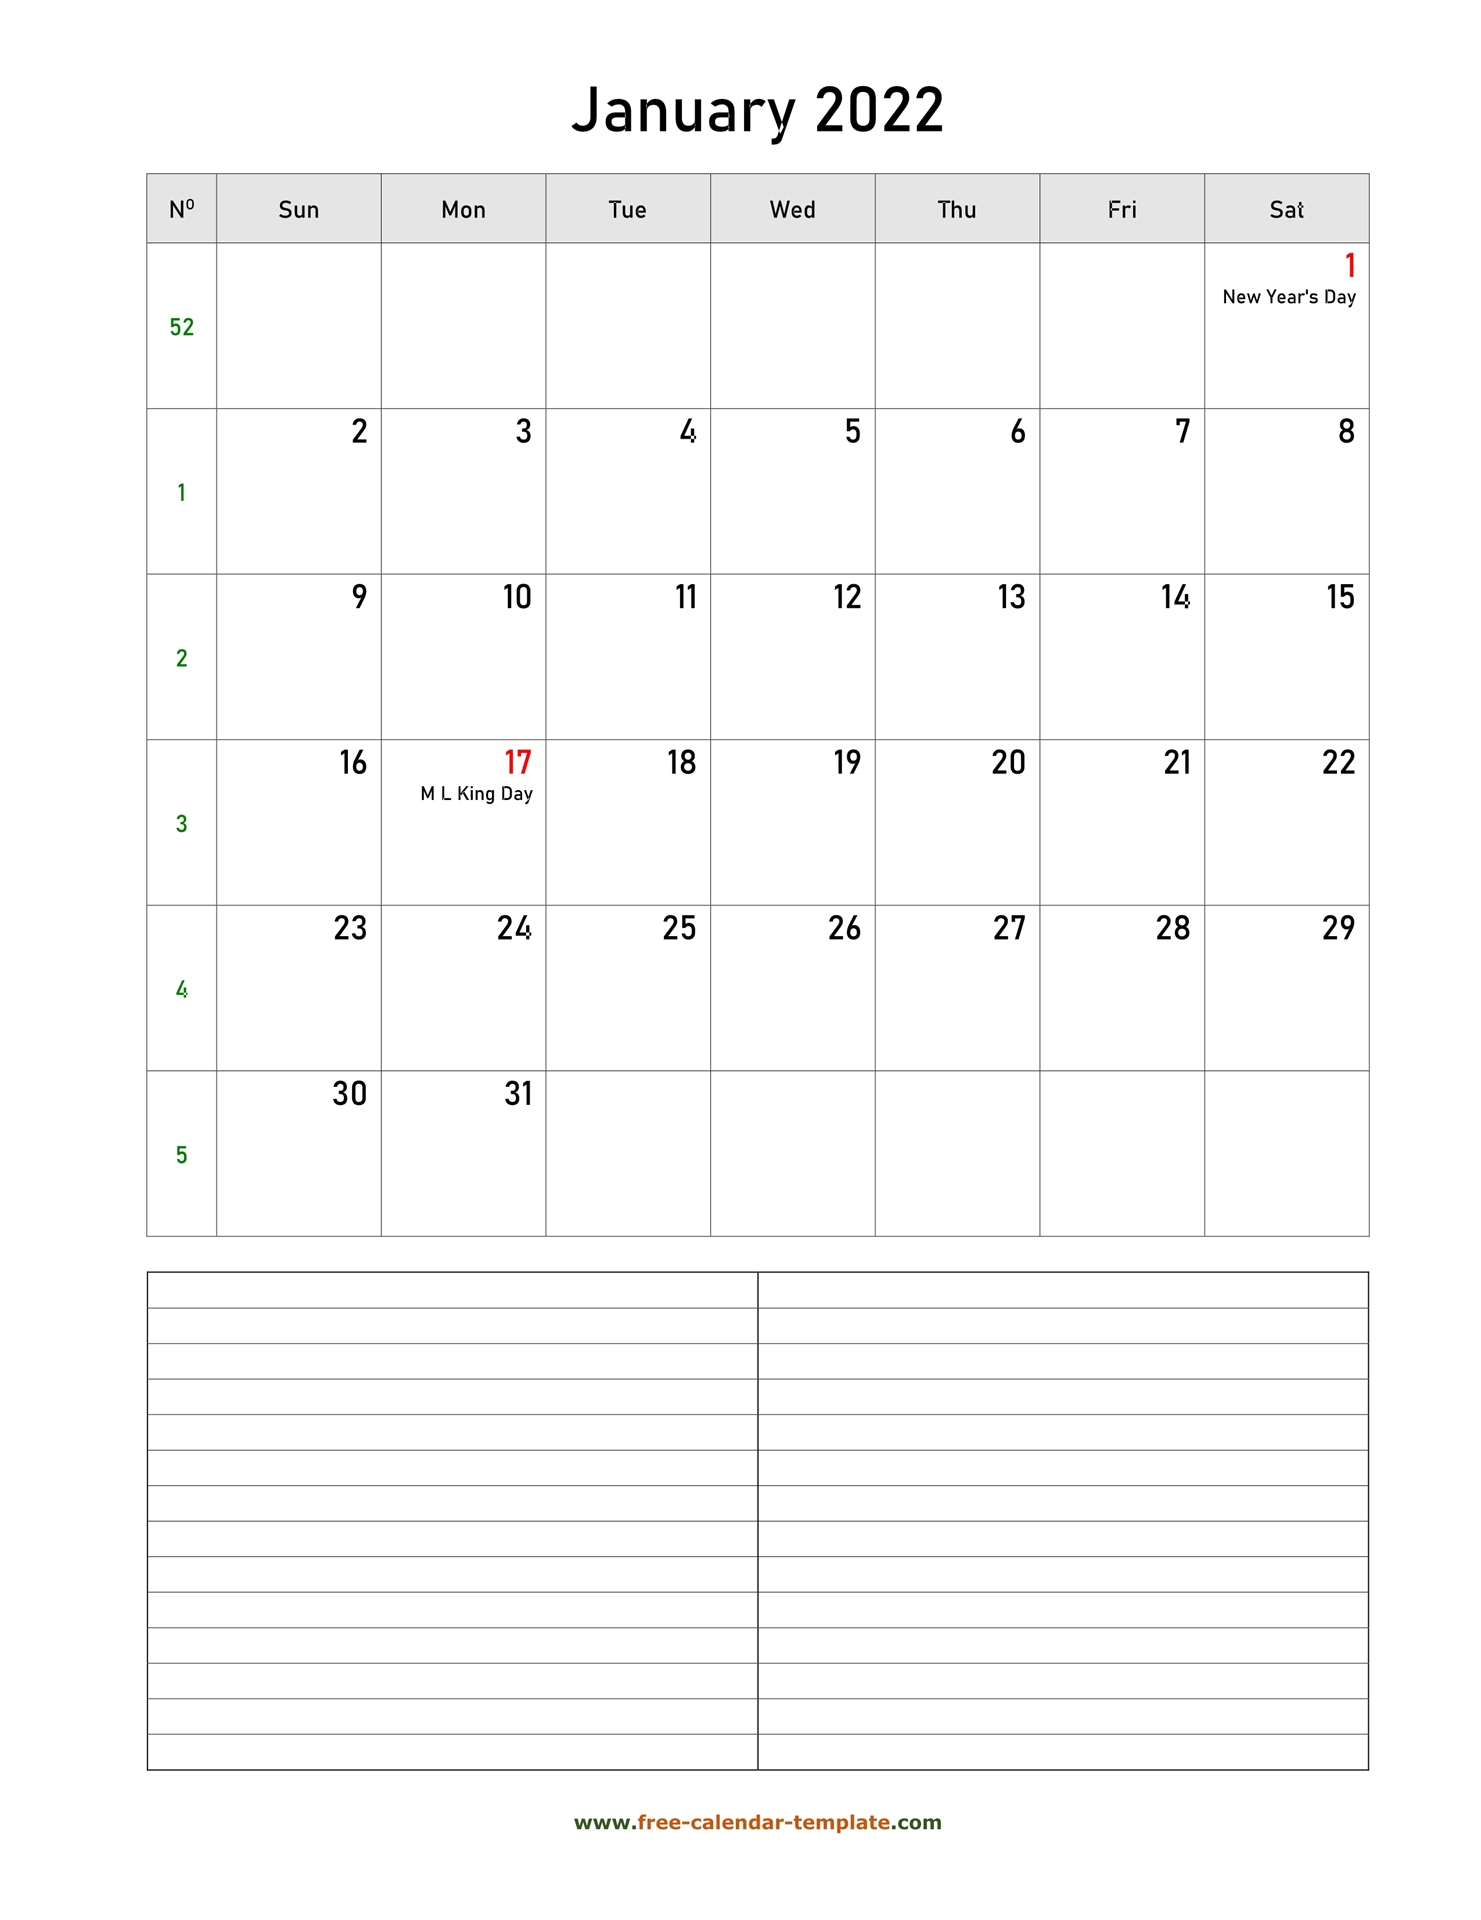 January 2022 Free Calendar Tempplate | Free-Calendar